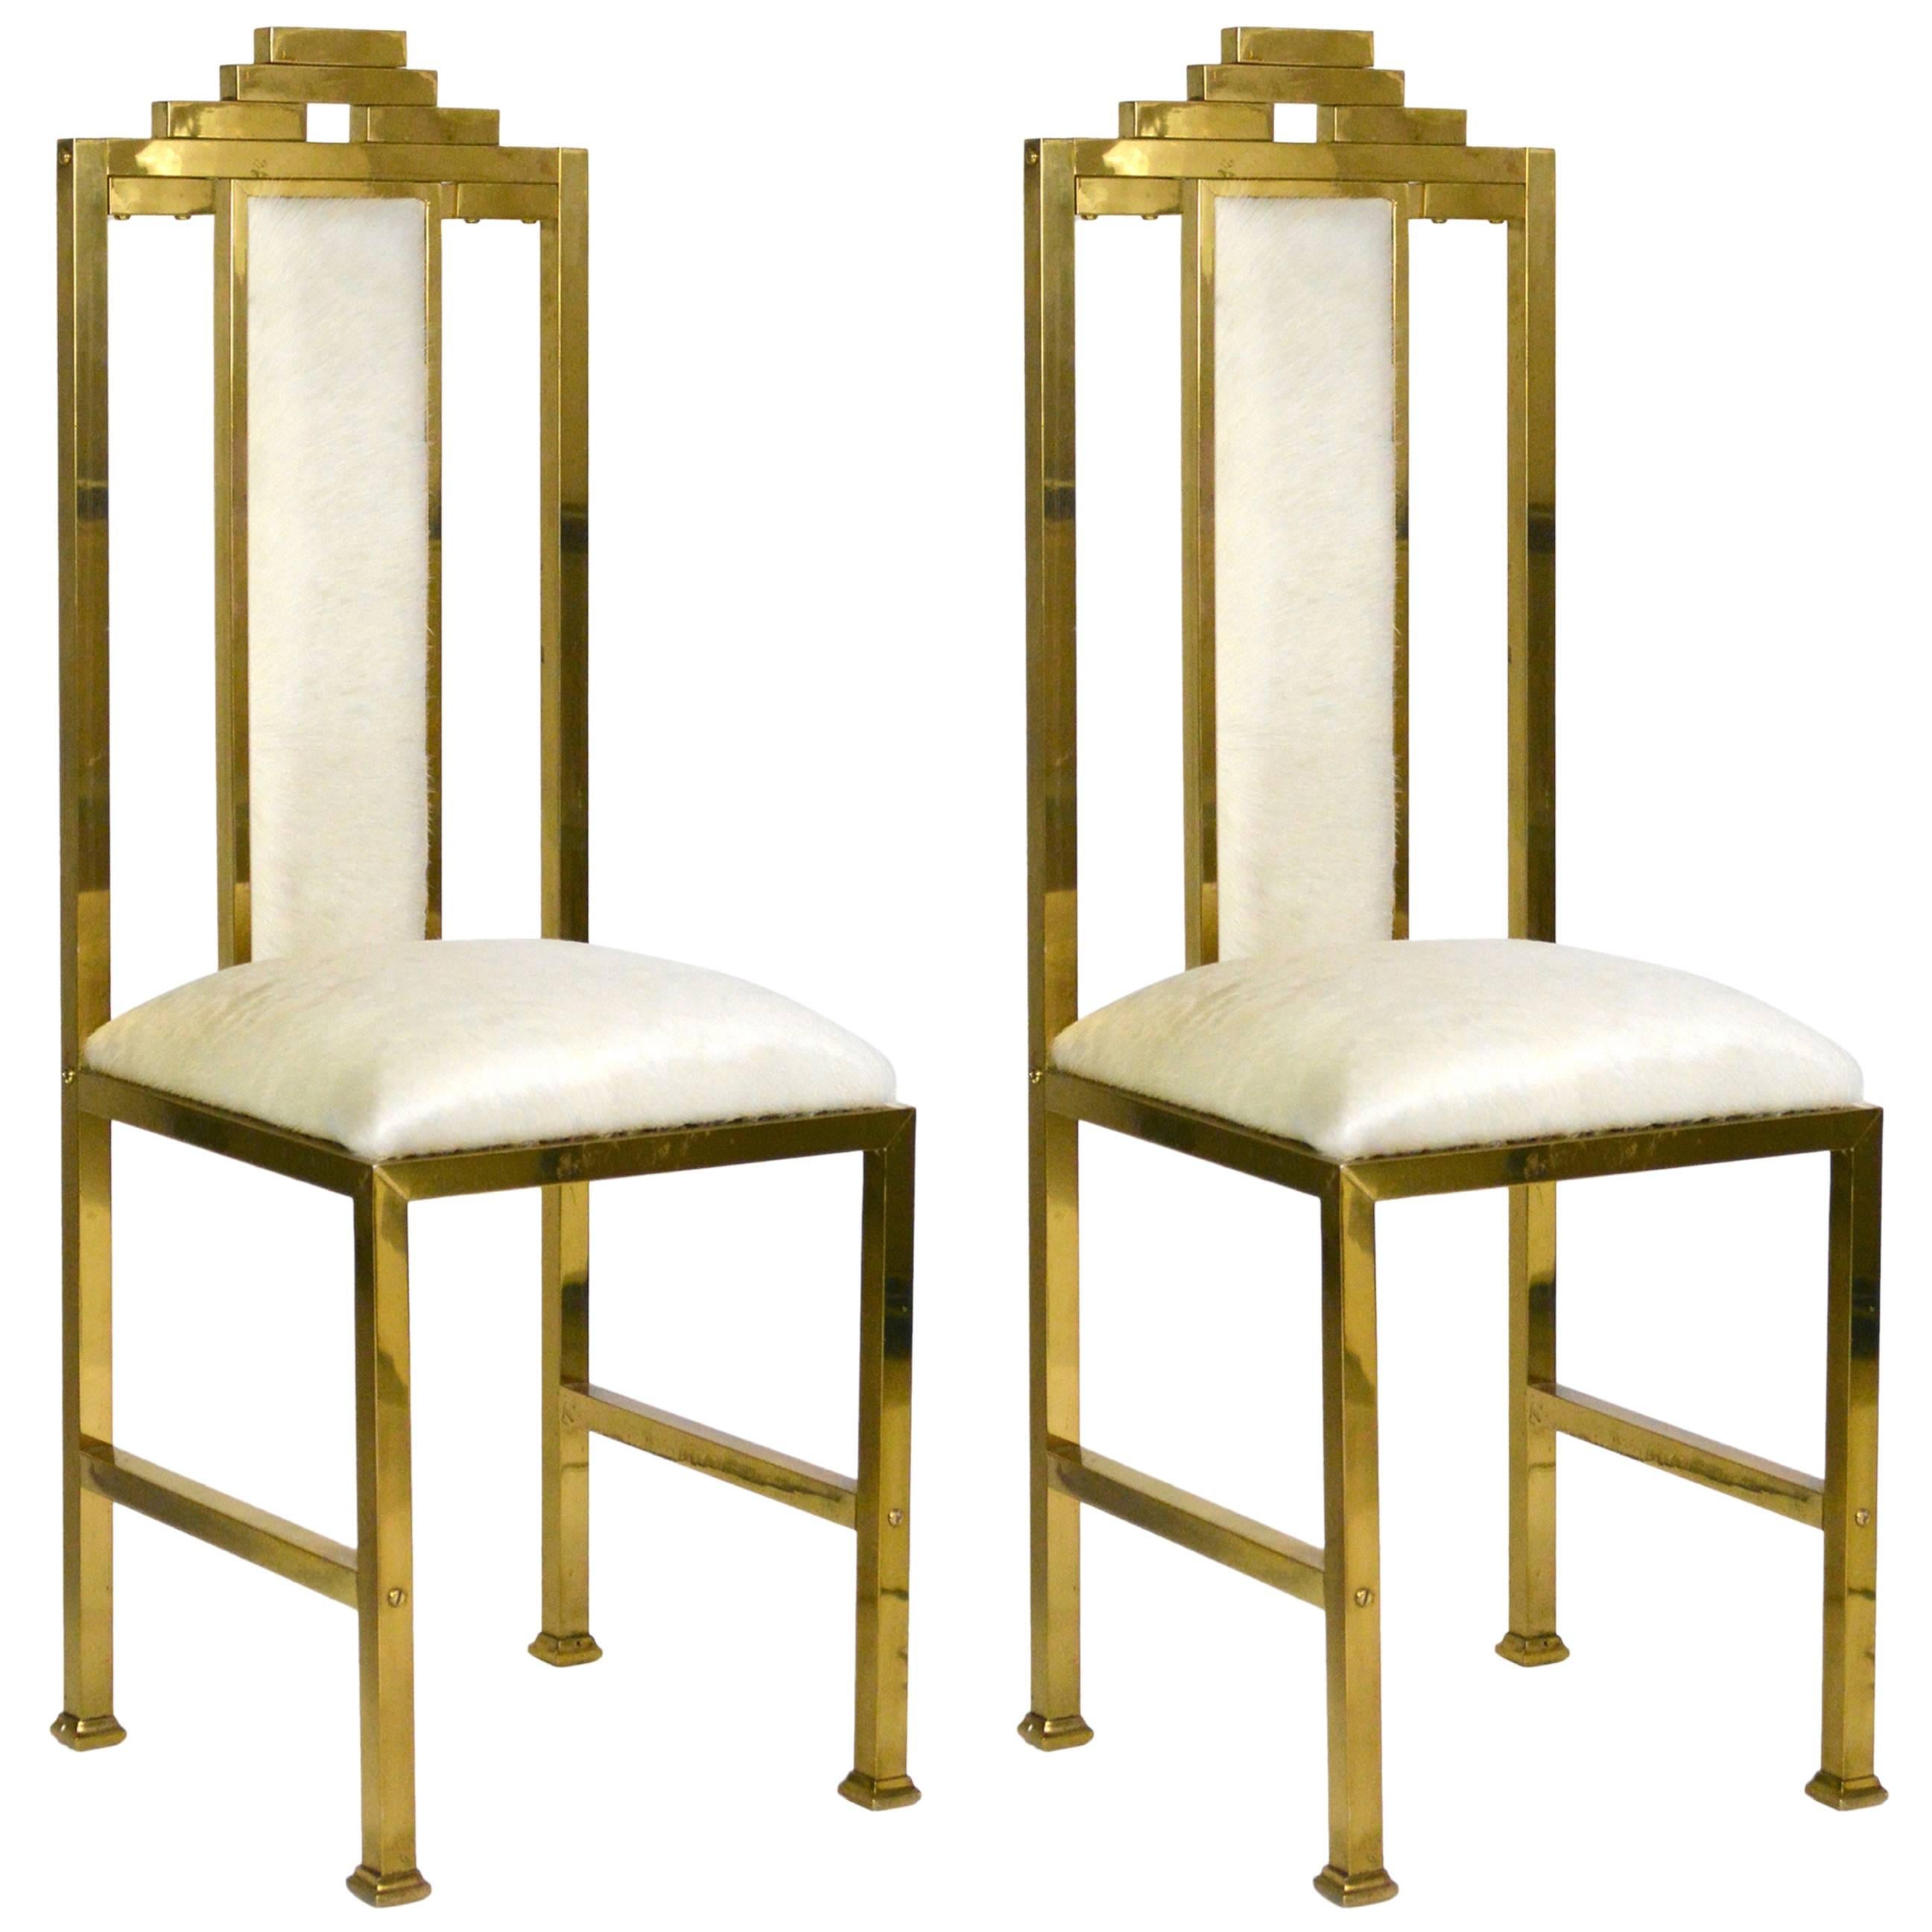 Four Italian Brass 'Skyscraper' Chairs